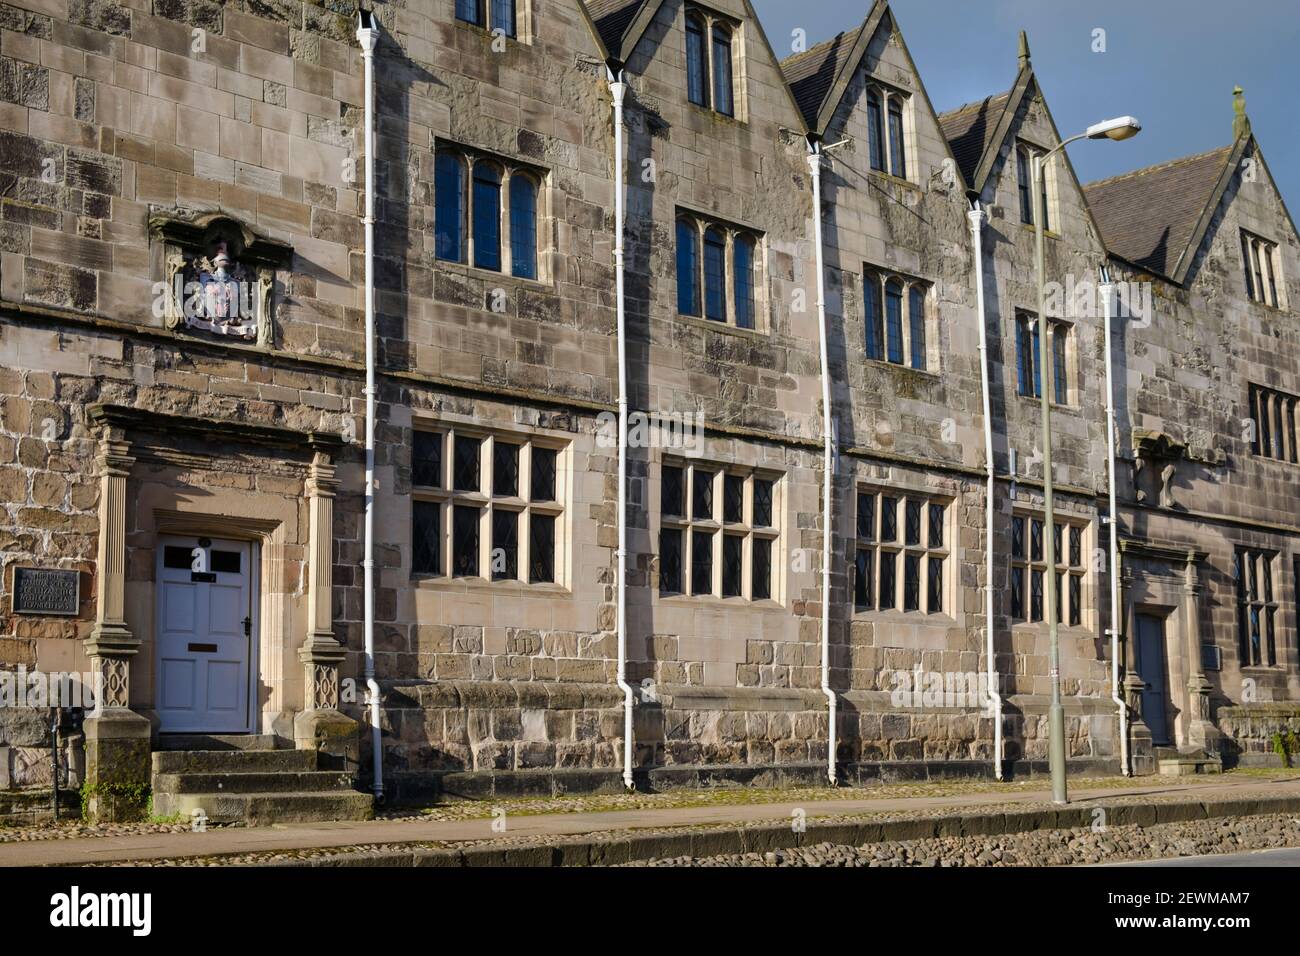 The former Queen Elizabeth's Grammar School, Church Street, Ashbourne, Derbyshire, which was founded in 1585. Stock Photo